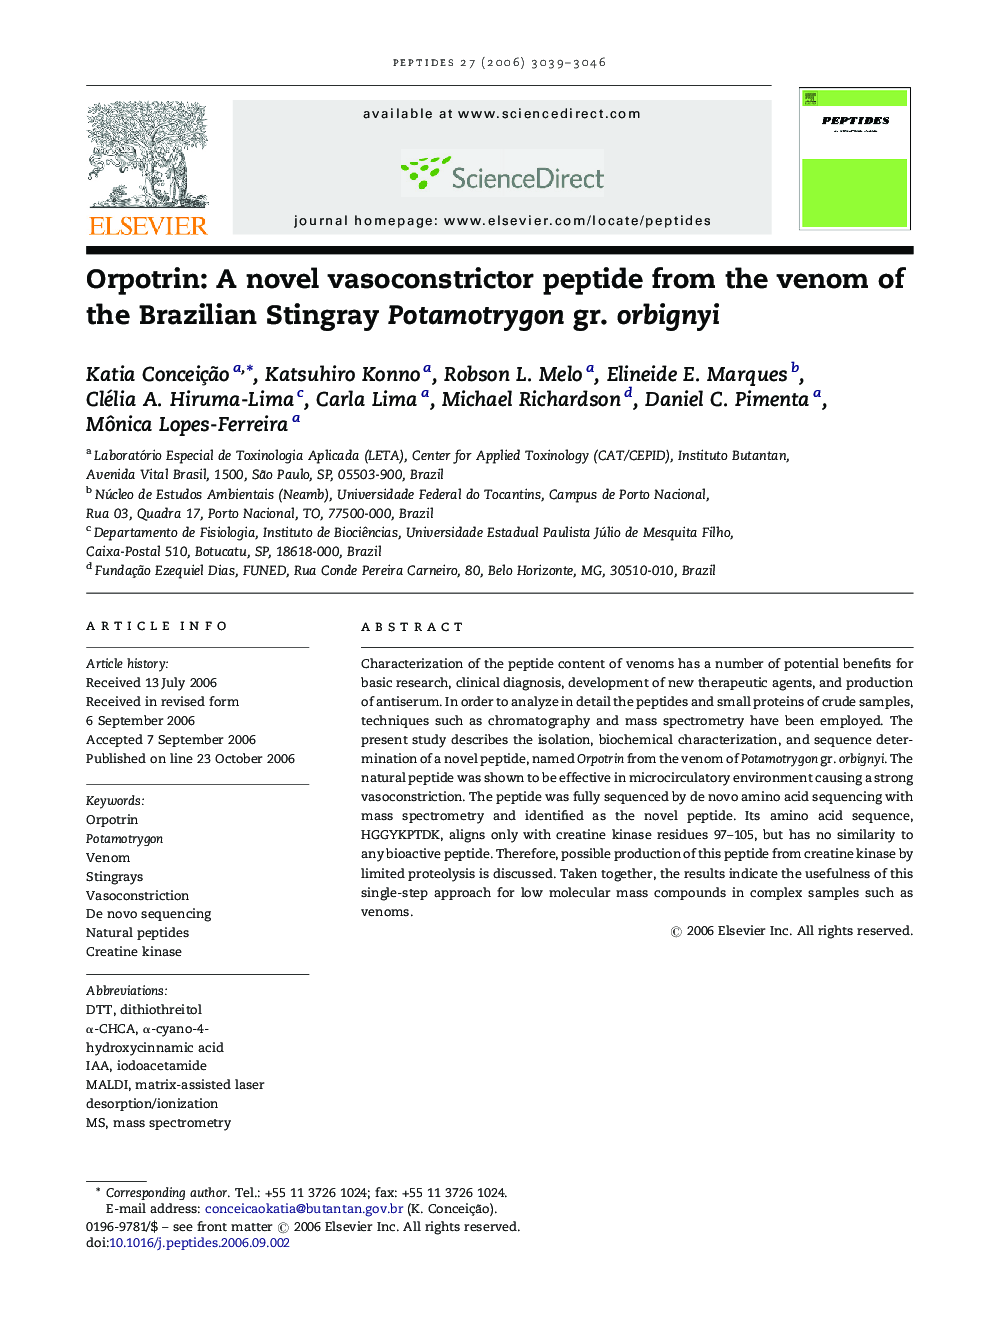 Orpotrin: A novel vasoconstrictor peptide from the venom of the Brazilian Stingray Potamotrygon gr. orbignyi